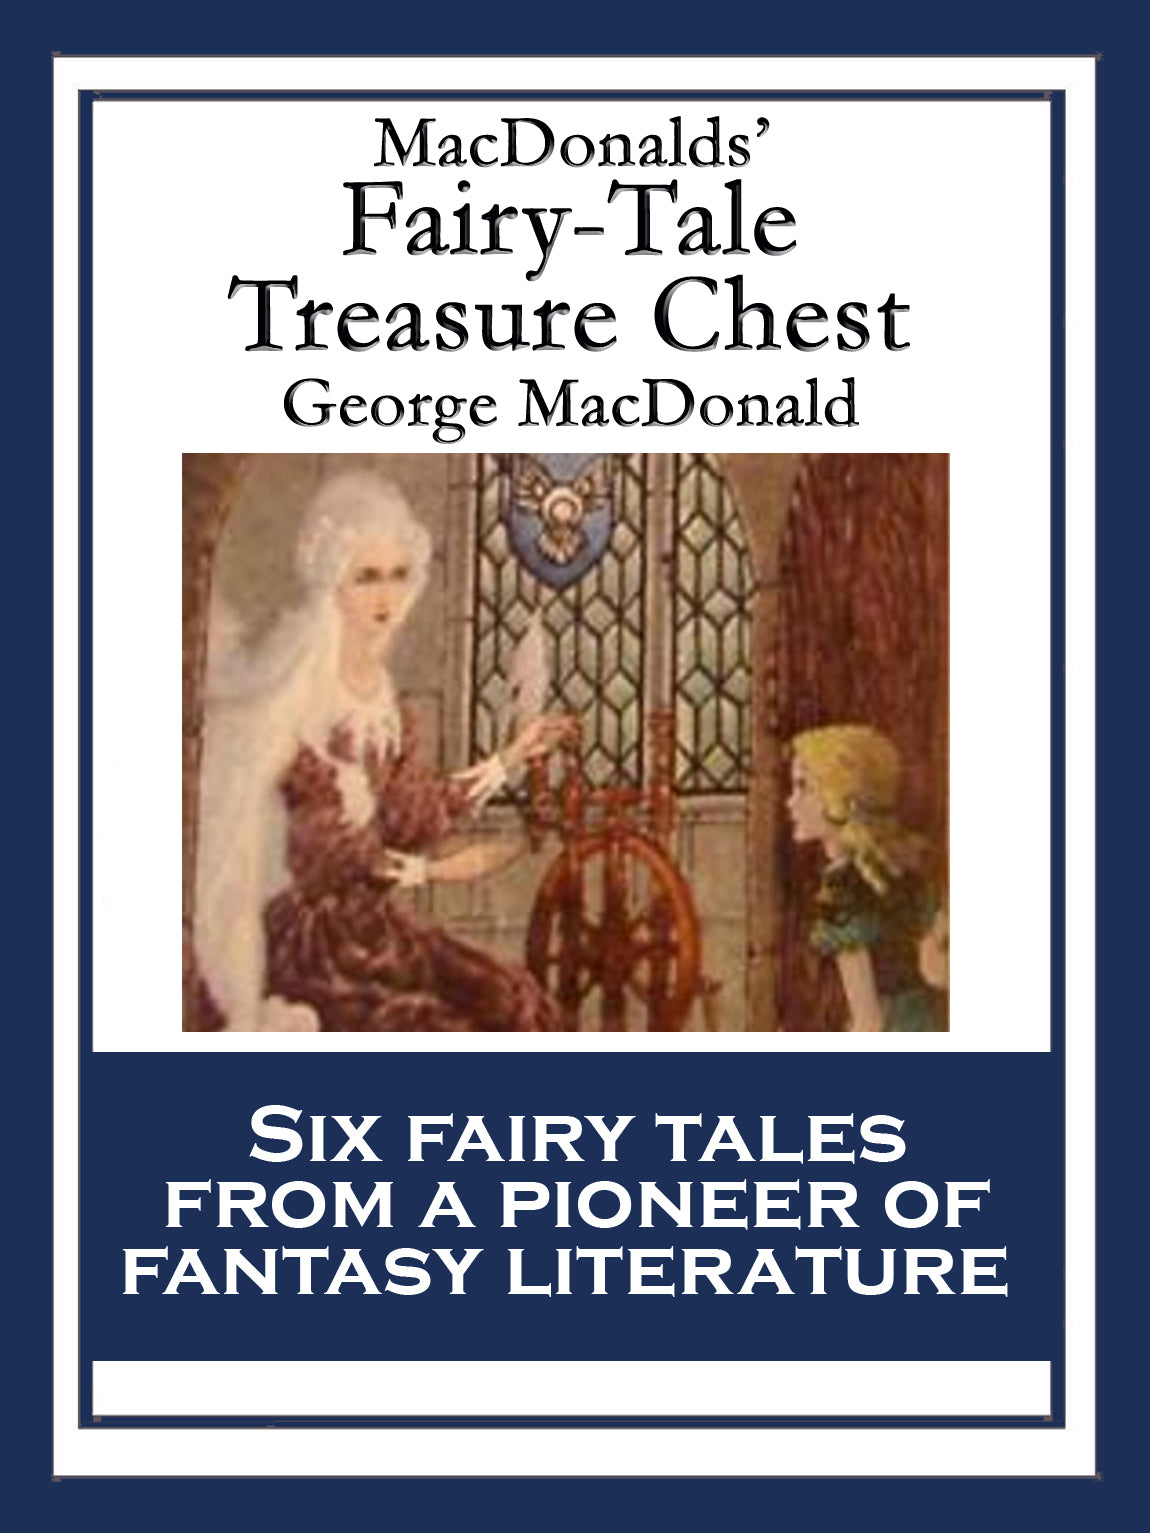 Cover art for MacDonalds’ Fairy-Tale Treasure Chest.